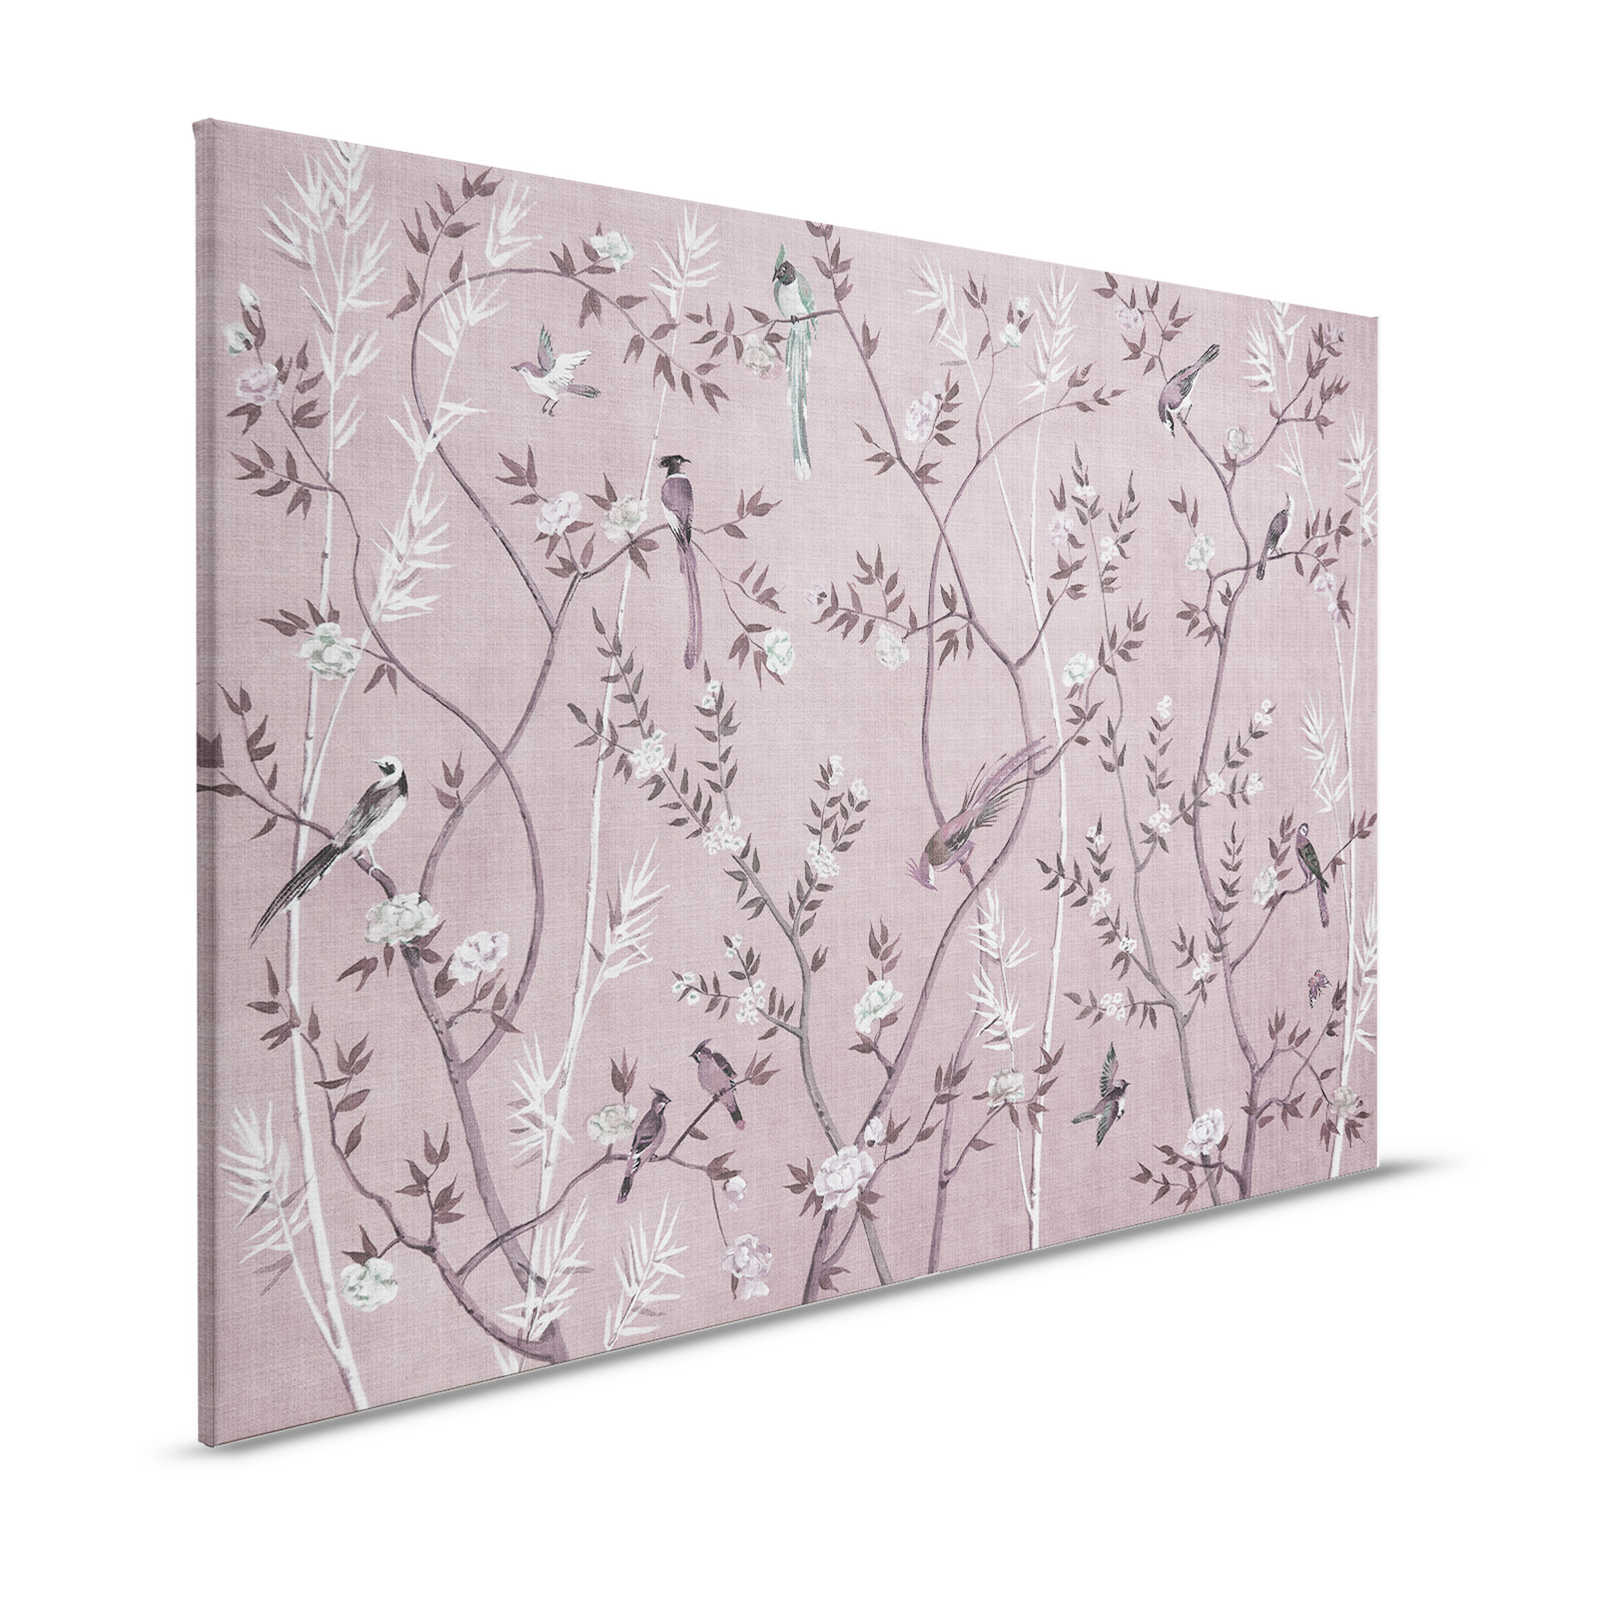 Tea Room 3 - Canvas schilderij Birds & Blossoms Design in Roze & Wit - 1.20 m x 0.80 m
